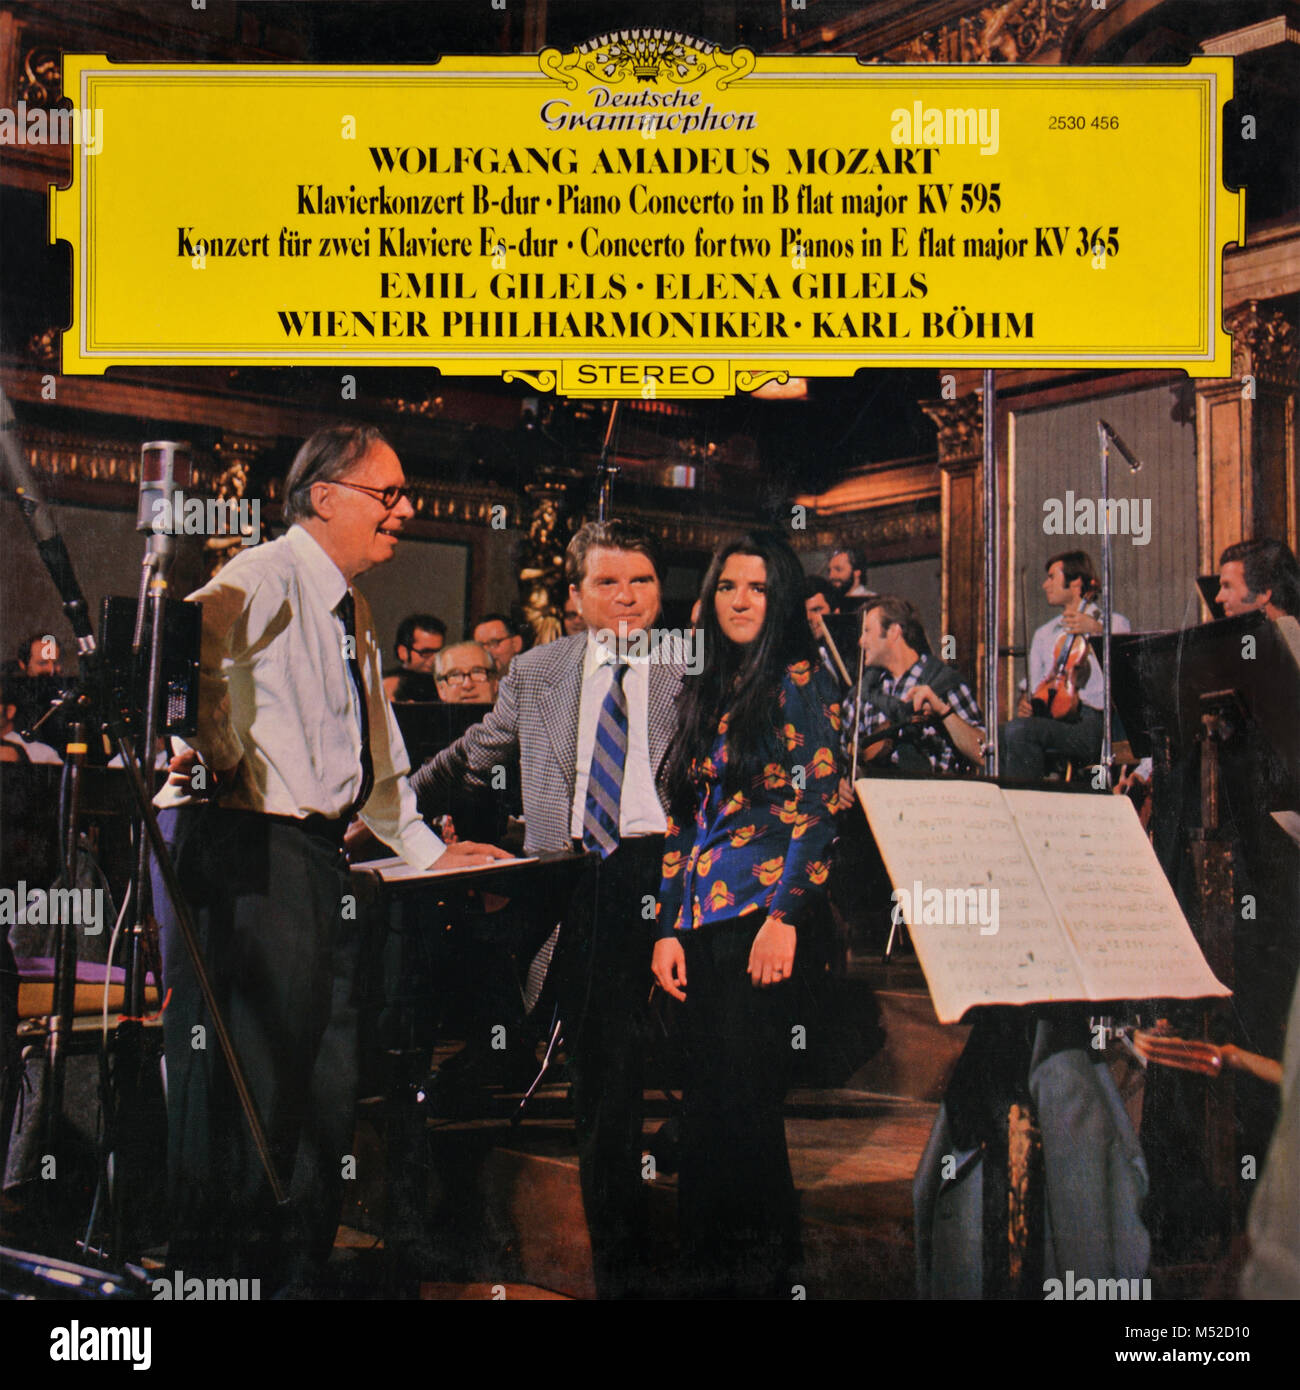 Wolfgang Amadeus Mozart - Emil Gilels, Elena Gilels, Wiener Philharmoniker,Karl Böhm - original Vinyl Album Cover - 1974 Stockfoto